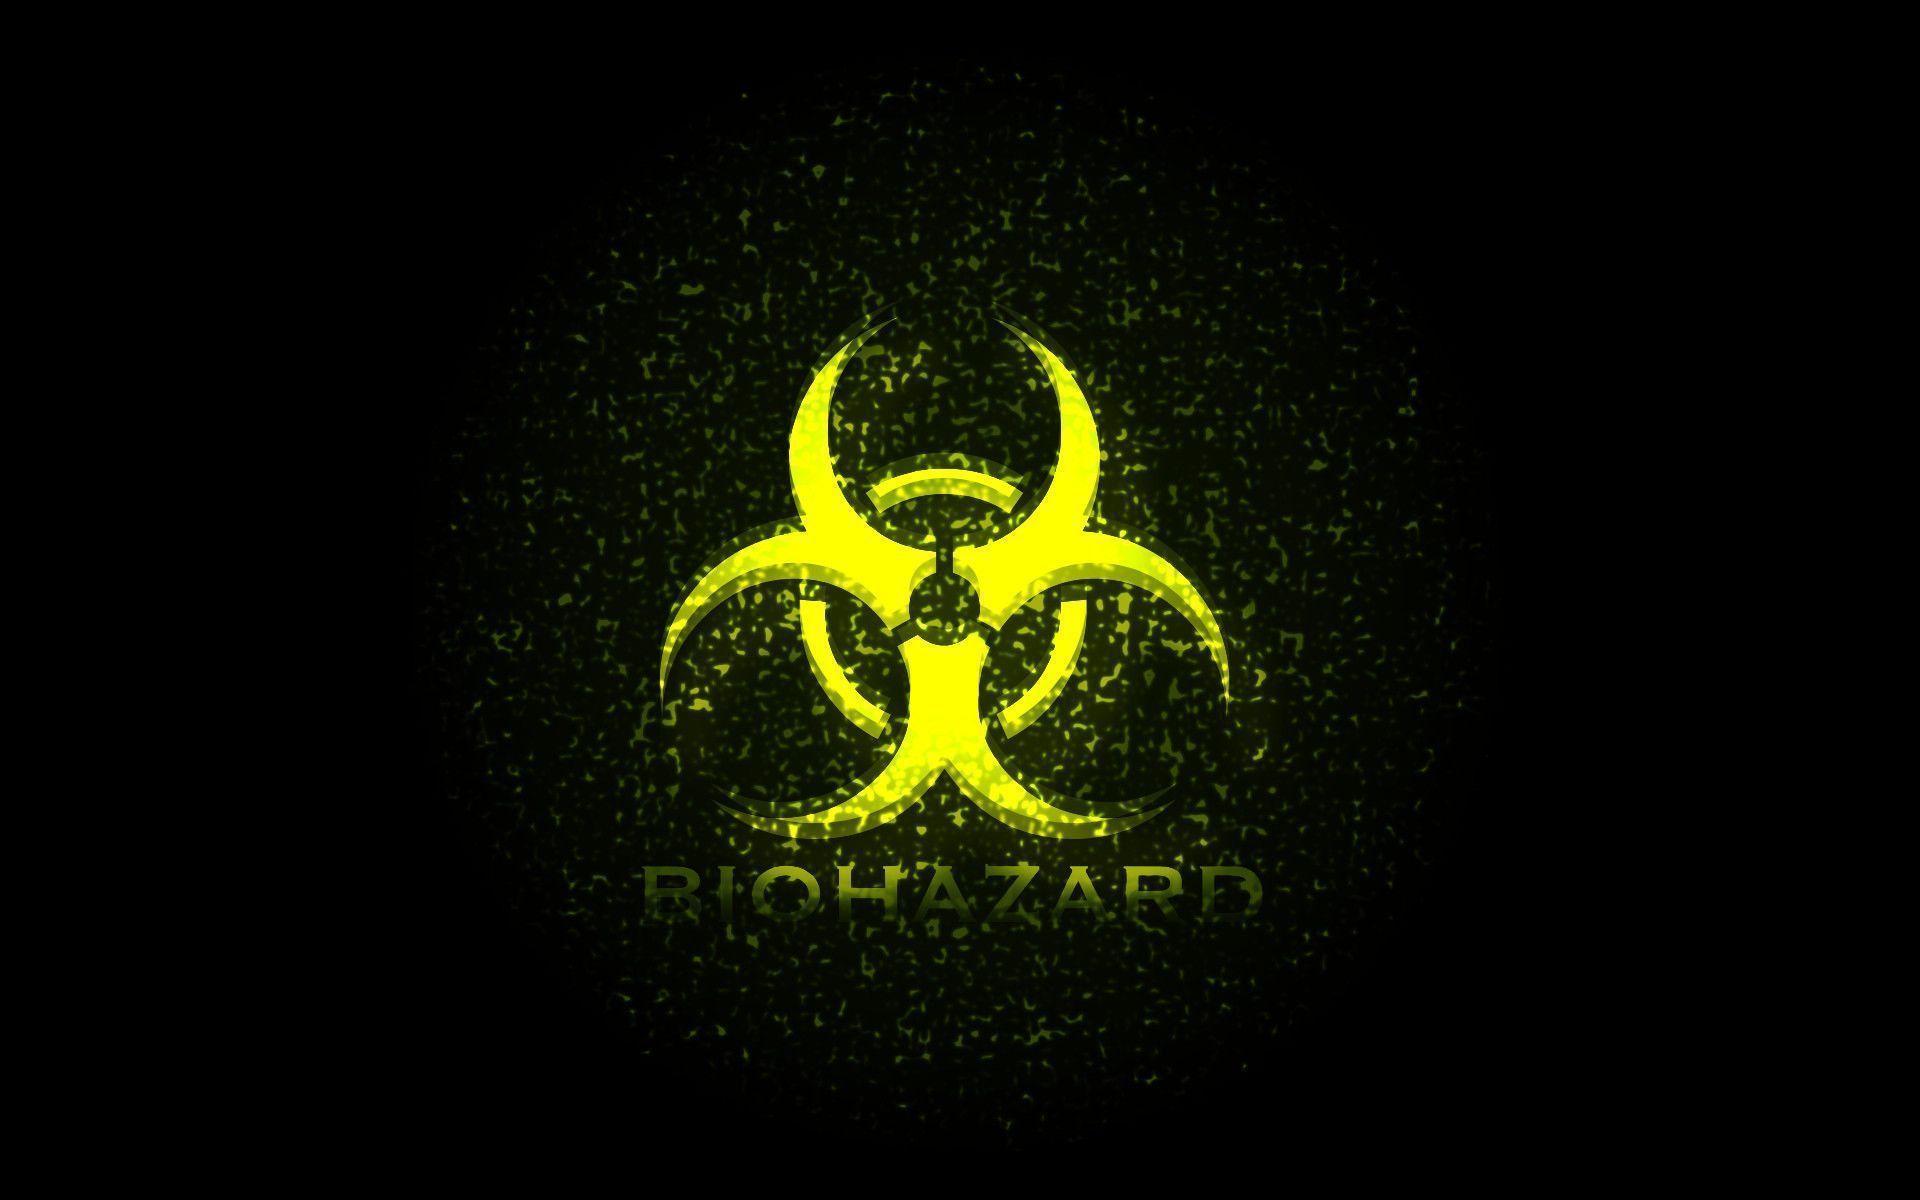 Biohazard Symbol Wallpapers - Wallpaper